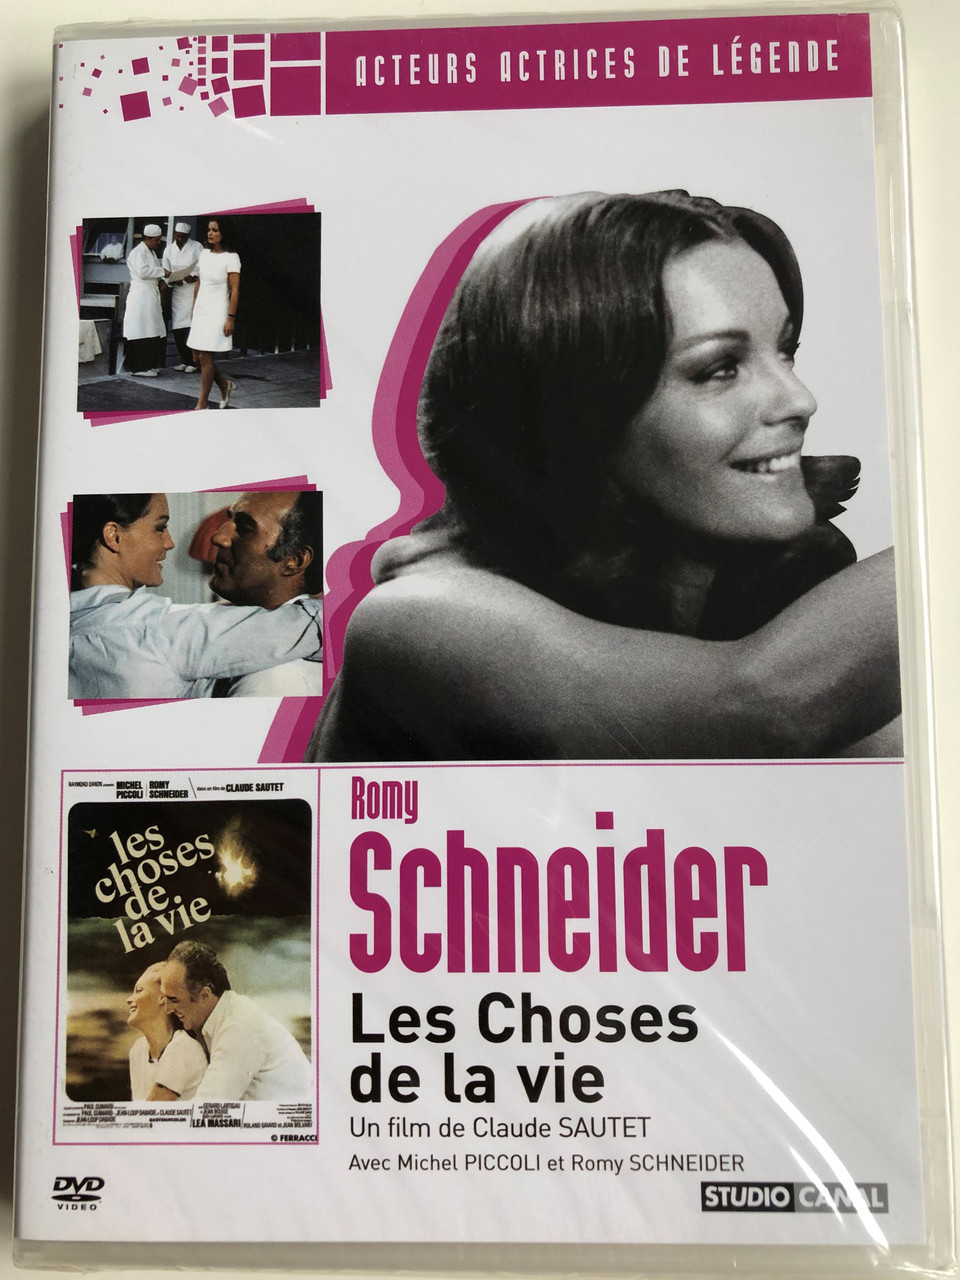 The Things of Life DVD 1970 Les Choses de la vie / Directed by Claude Sautet  / Starring: Romy Schneider, Michel Piccoli - bibleinmylanguage